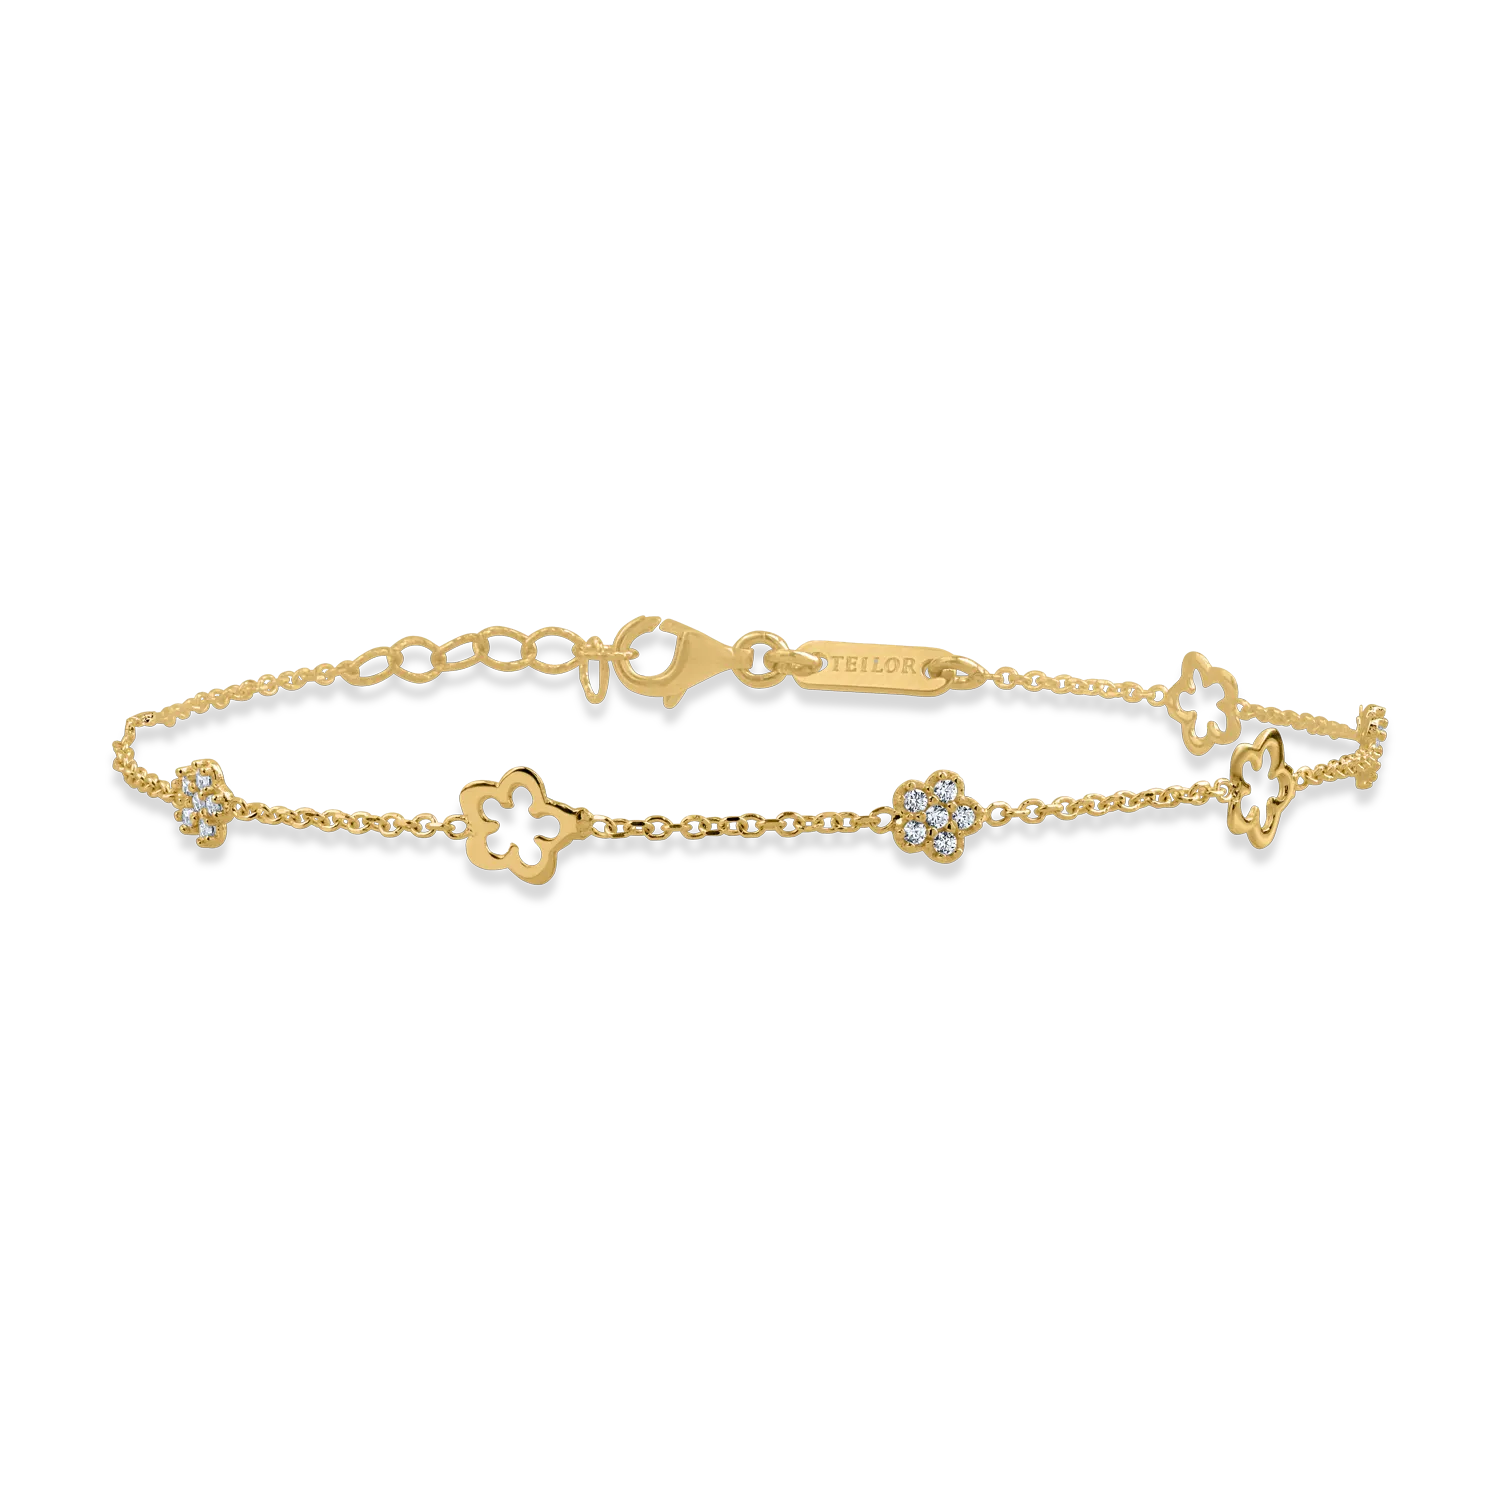 Yellow gold bracelet with flower pendants